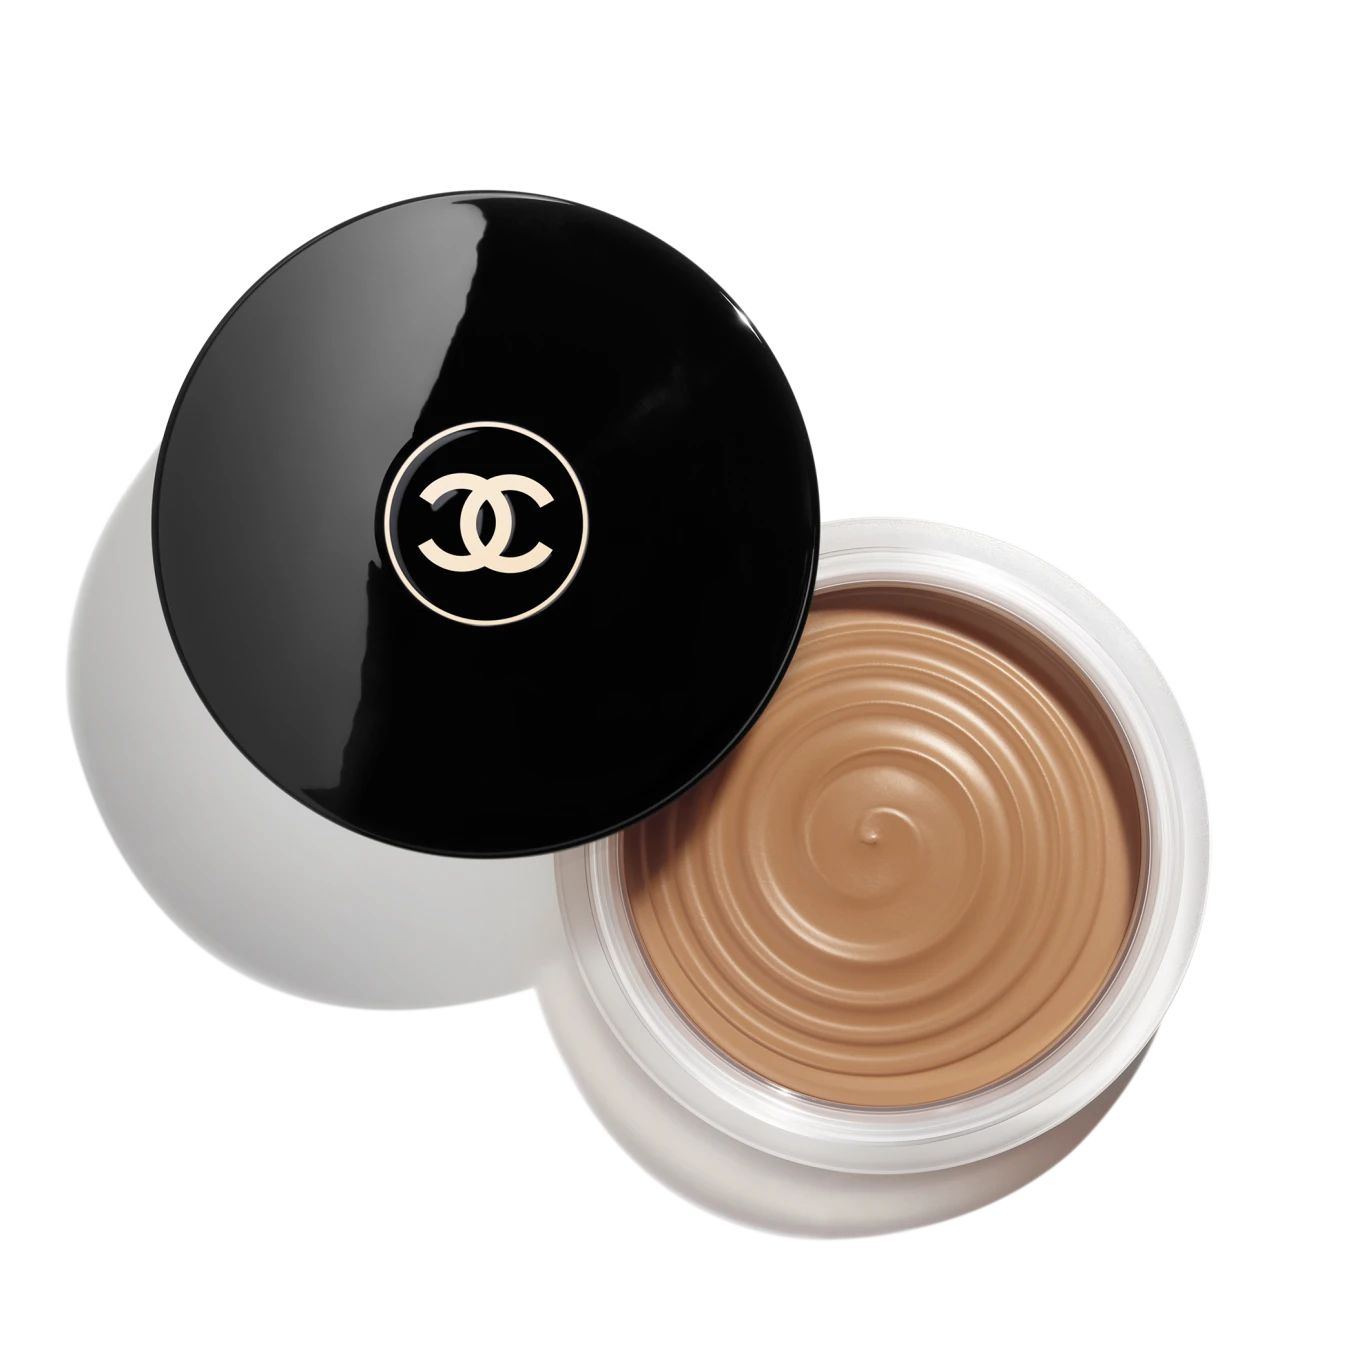 LES BEIGES Healthy glow bronzing cream 390 - Soleil tan bronze | CHANEL | Chanel, Inc. (US)